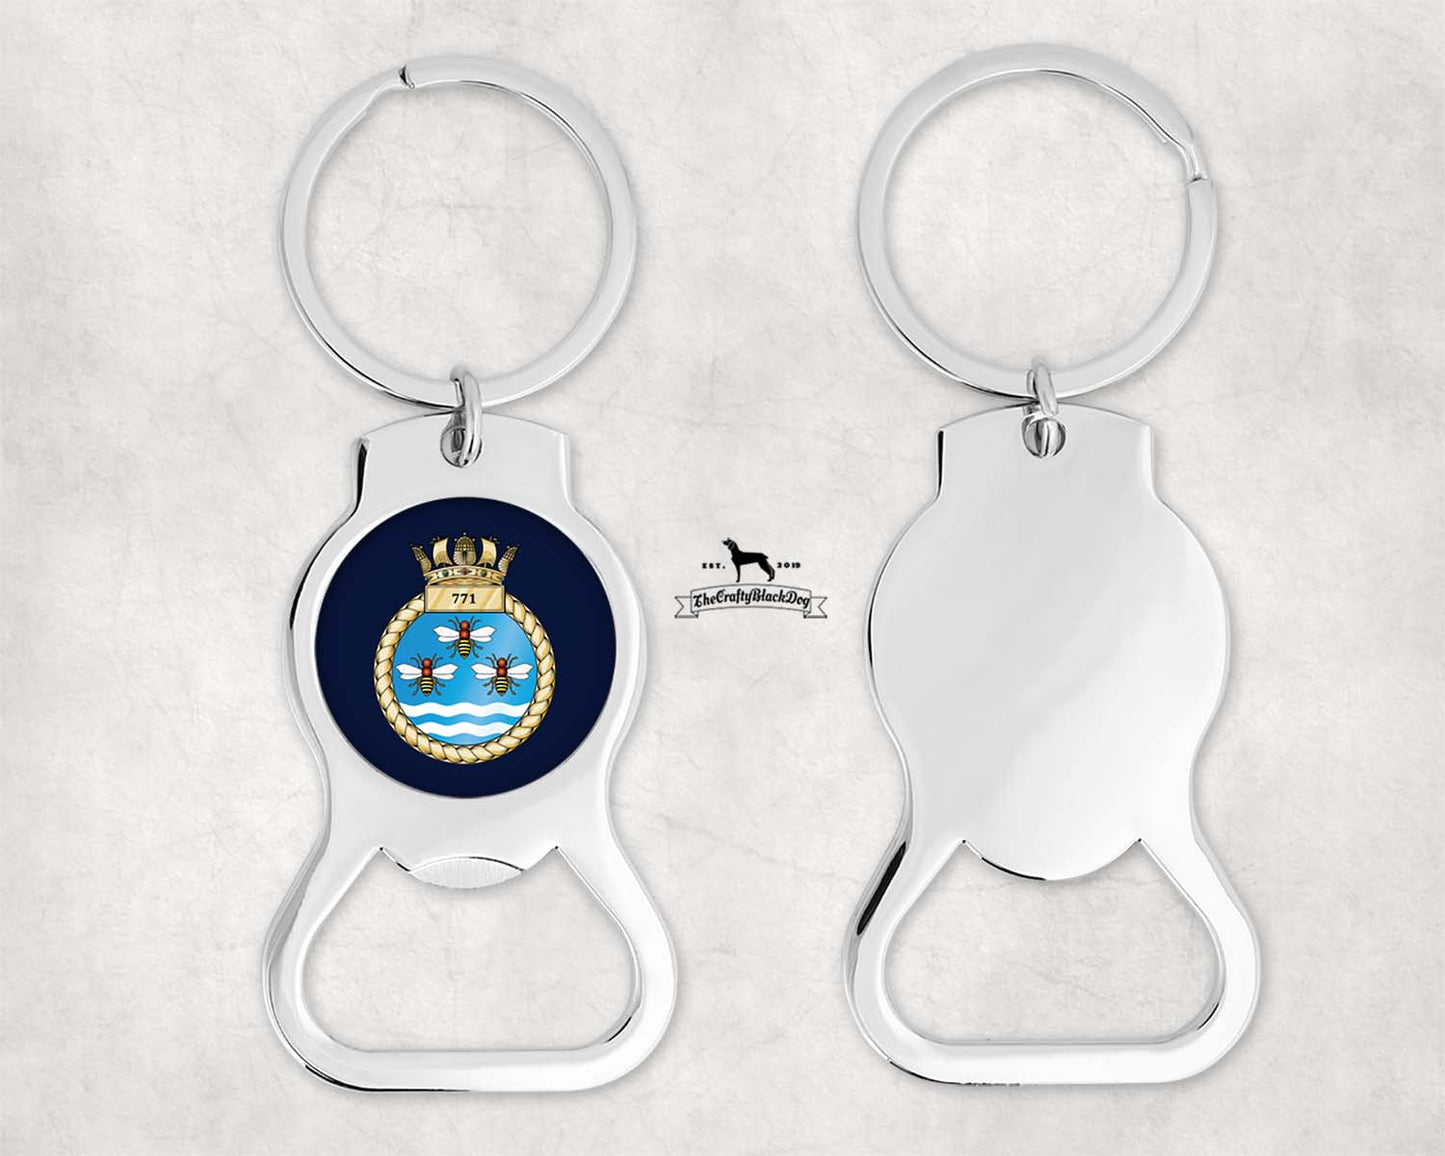 771 Naval Air Squadron - Bottle Opener Keyring